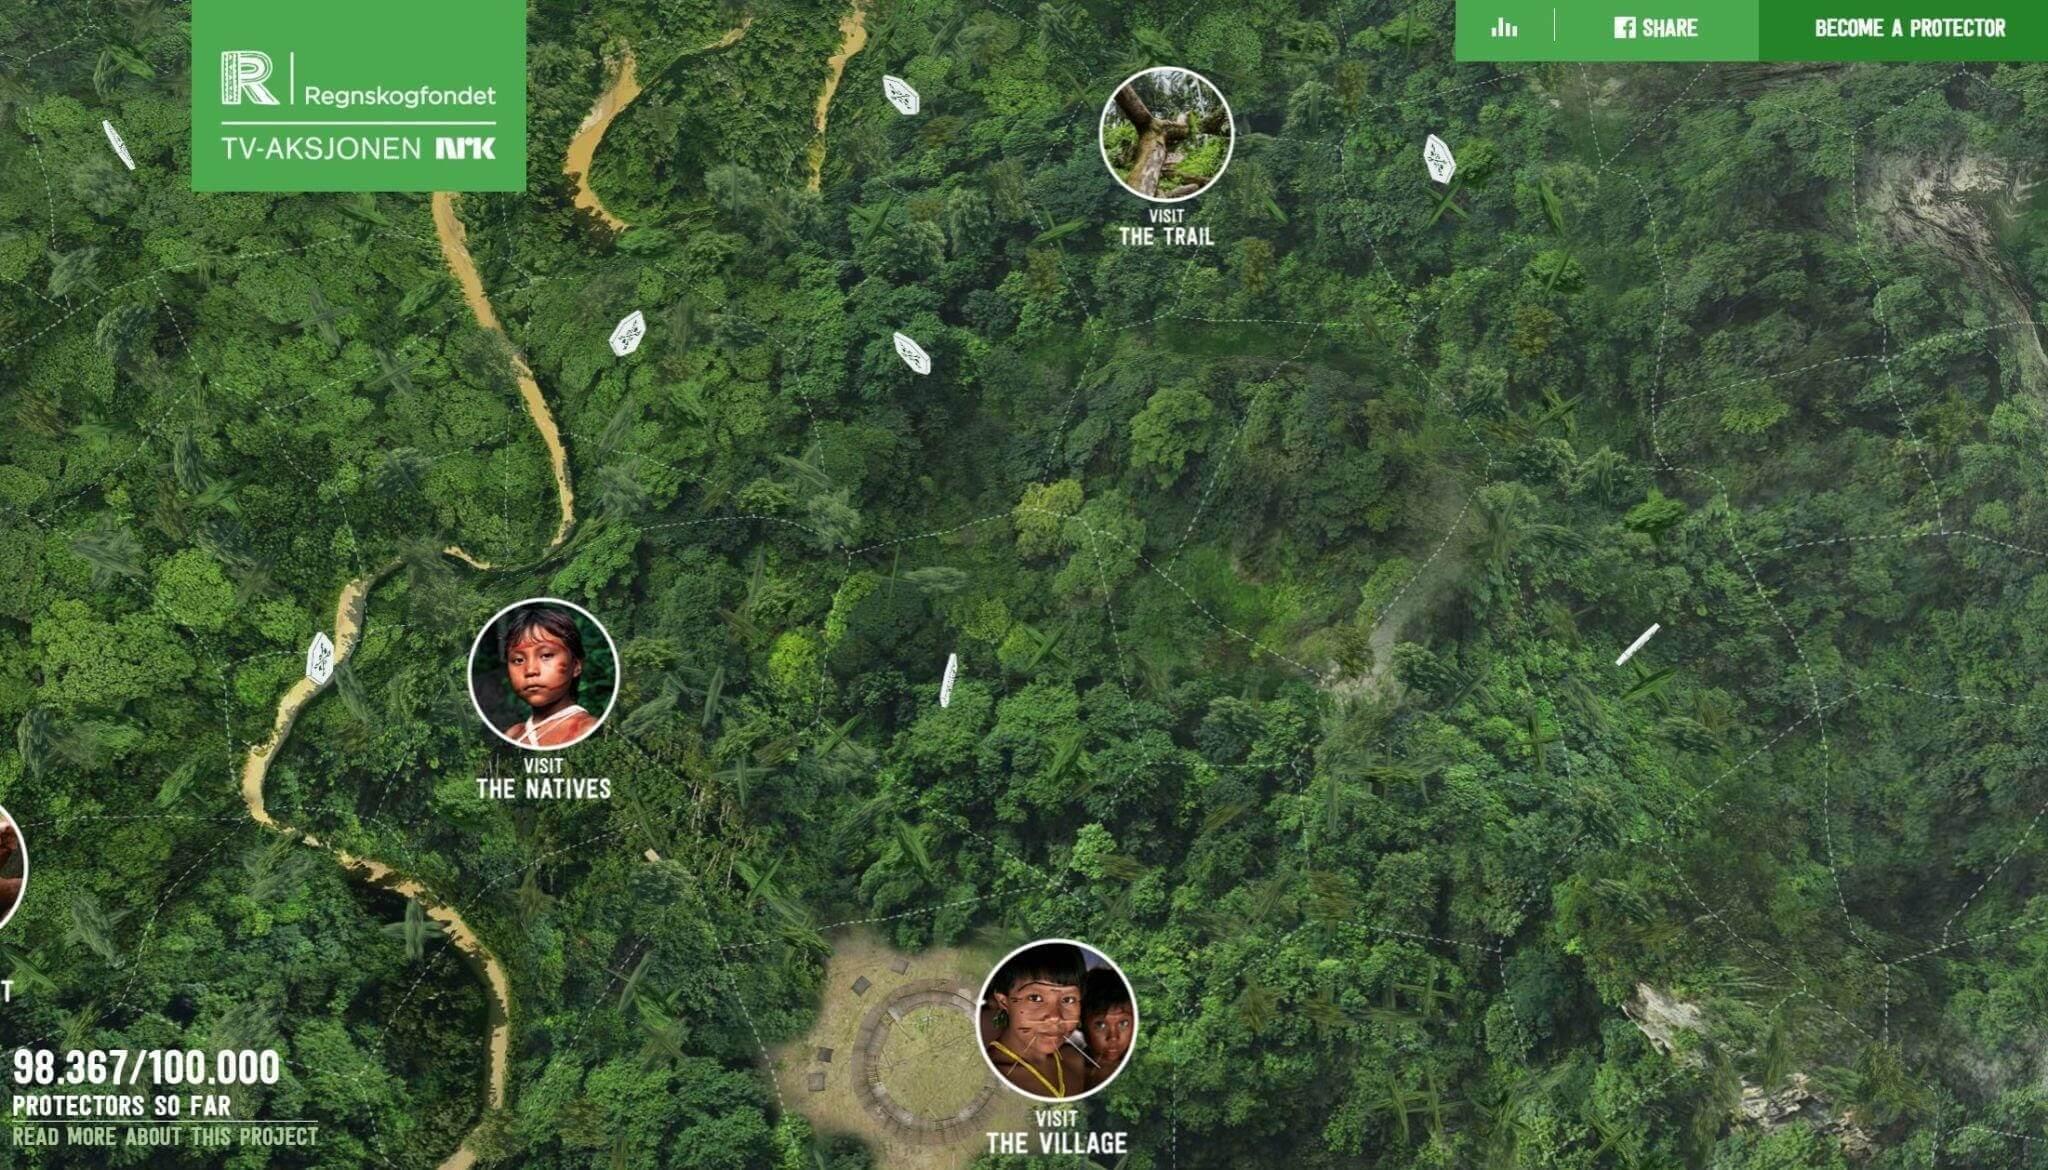 Rainforest Arkivert content personalization